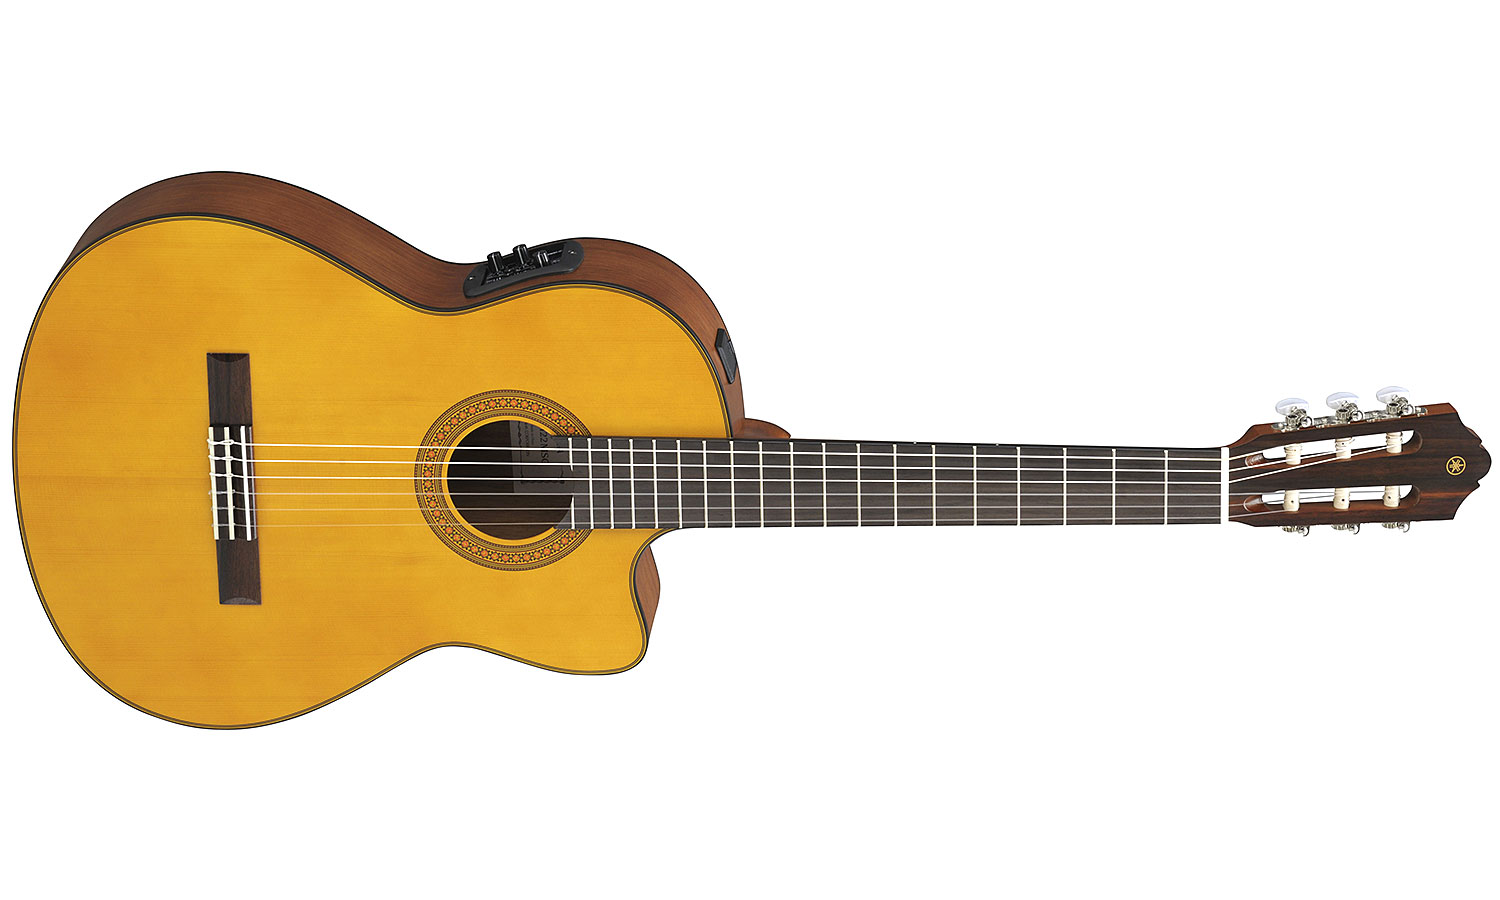 Yamaha Cgx122msc Spruce Top 4.4 Cw System 61 - Natural Matt - Classical guitar 4/4 size - Variation 1